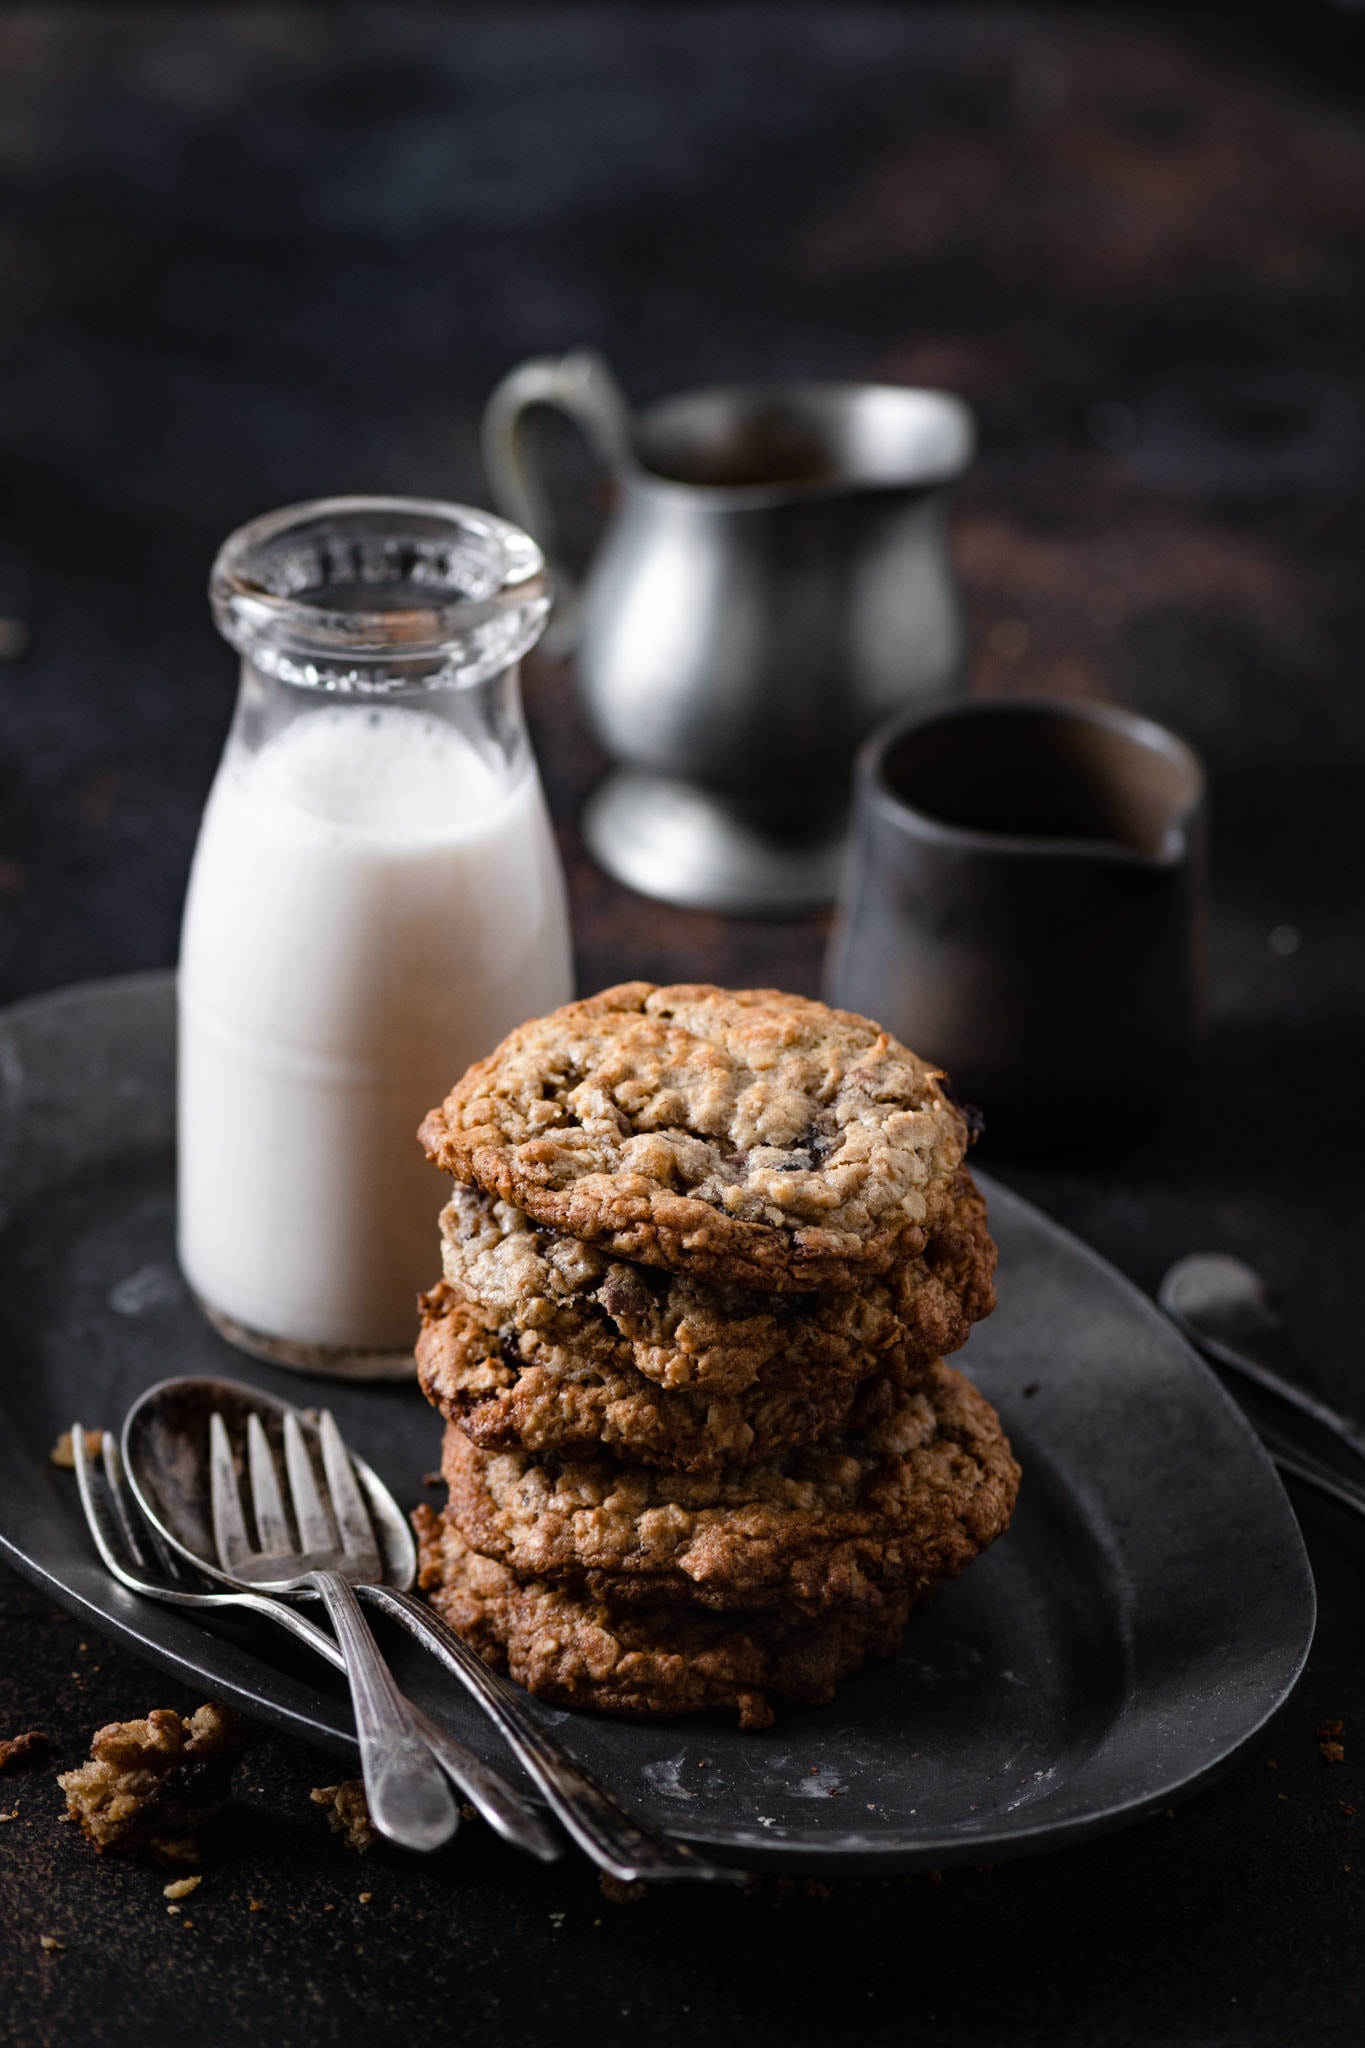 Chocolate Truffle Oatmeal Cookies - Two Cups Flour